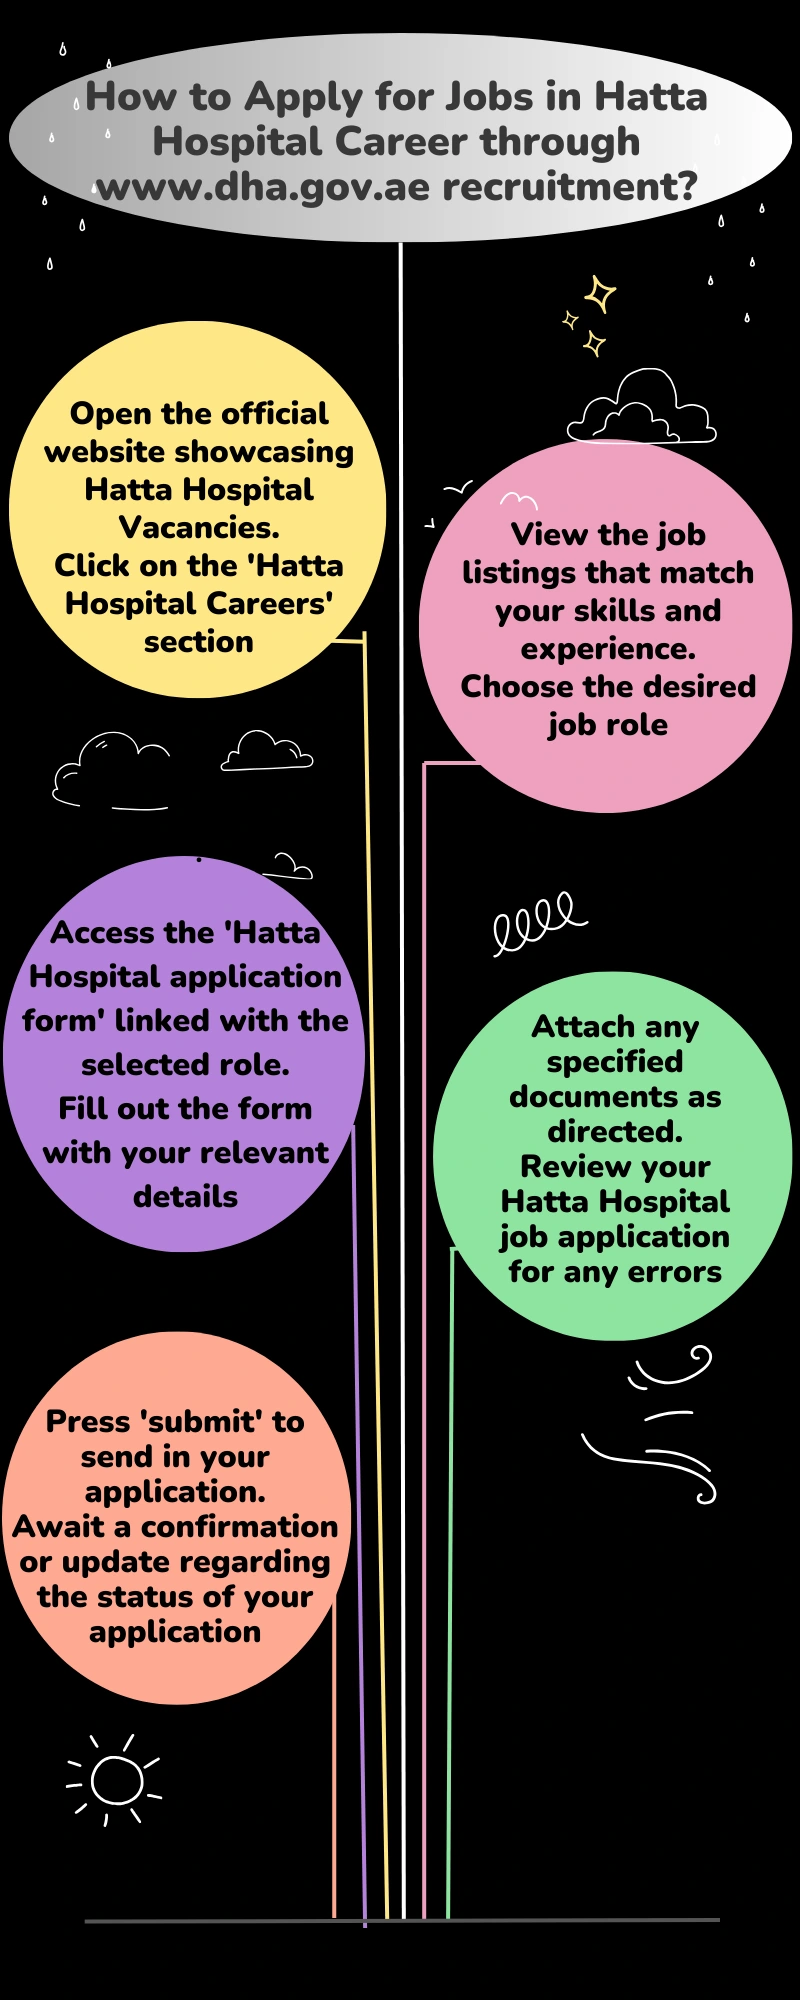 How to Apply for Jobs in Hatta Hospital Career through www.dha.gov.ae recruitment?